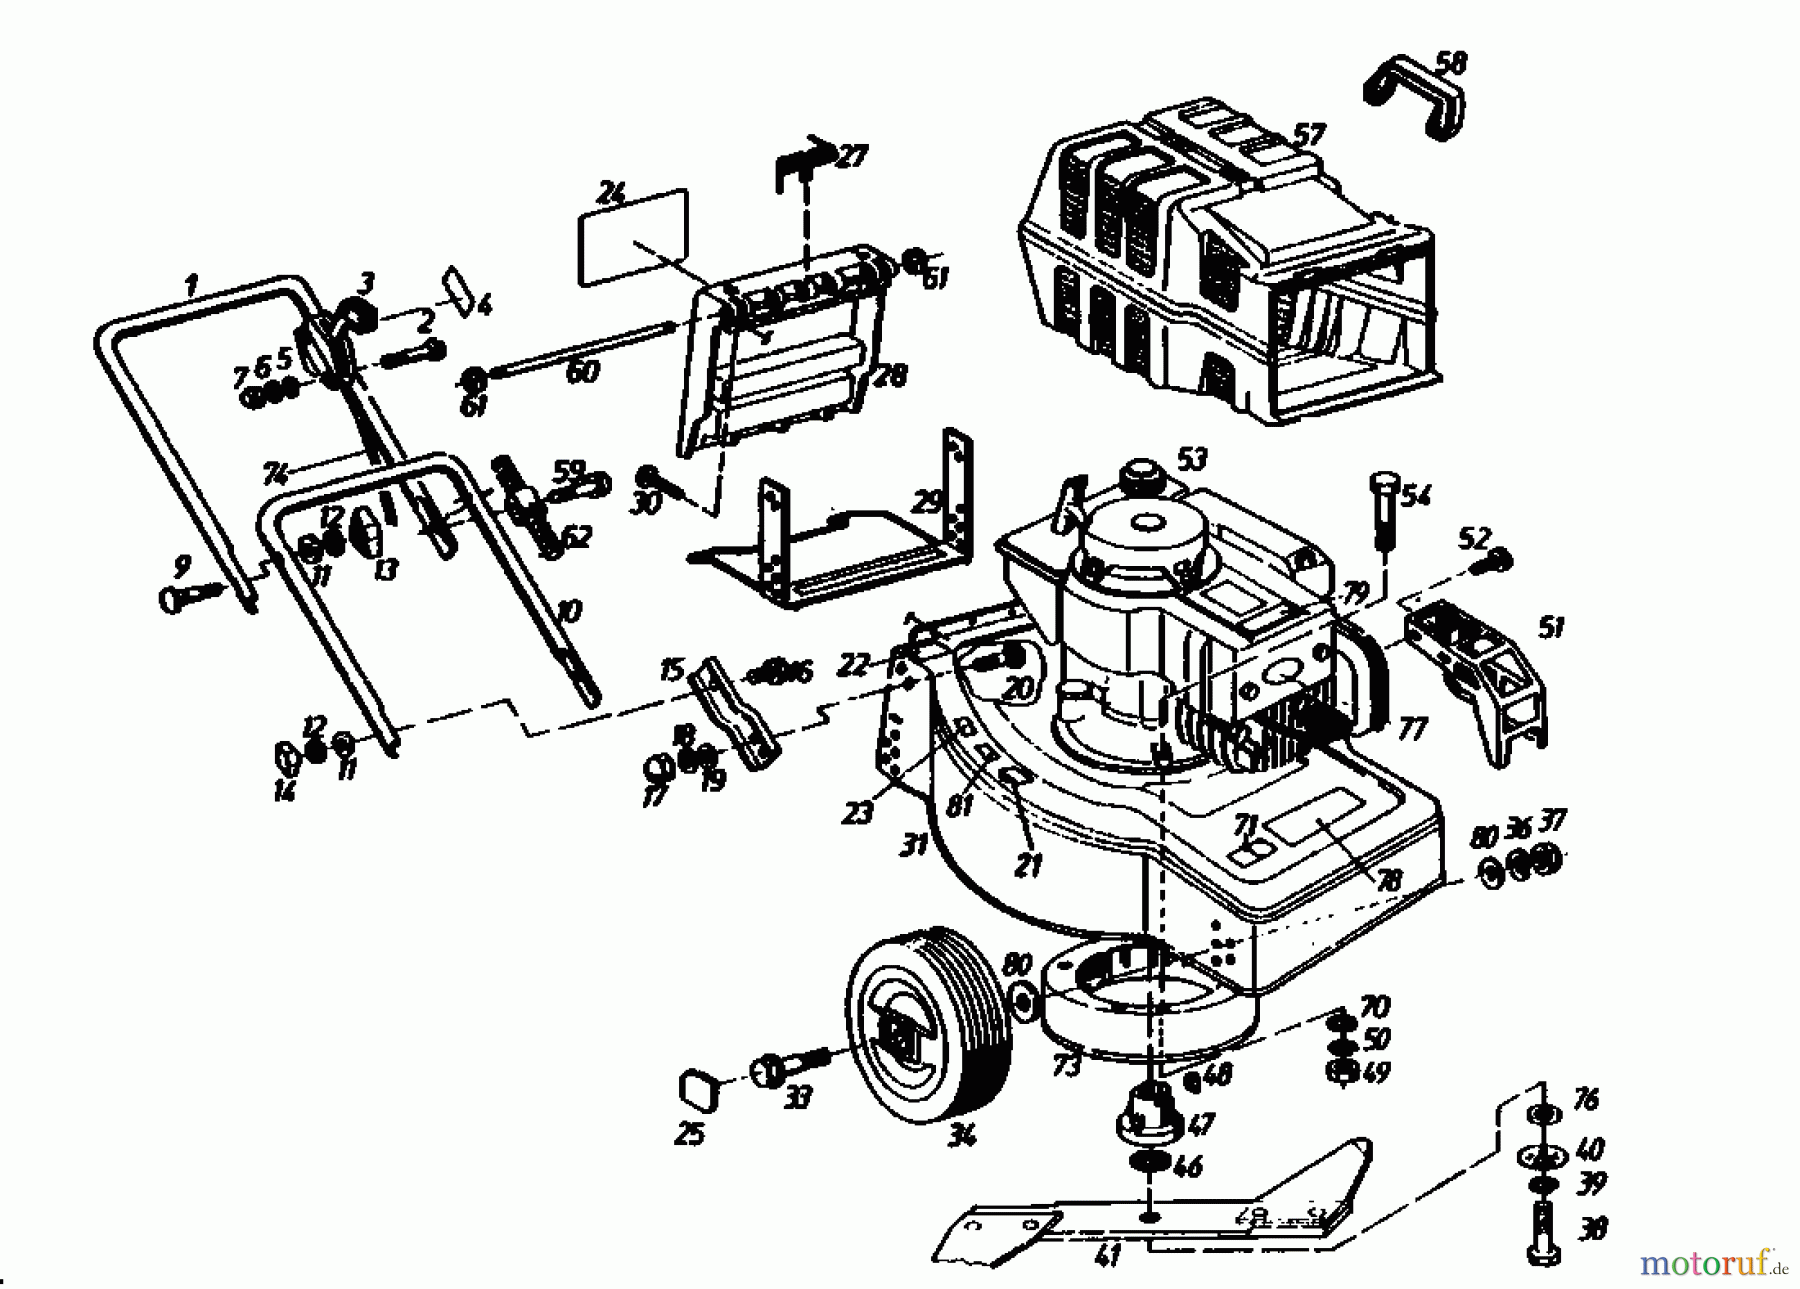  Golf Petrol mower 345 H 4 02842.01  (1992) Basic machine